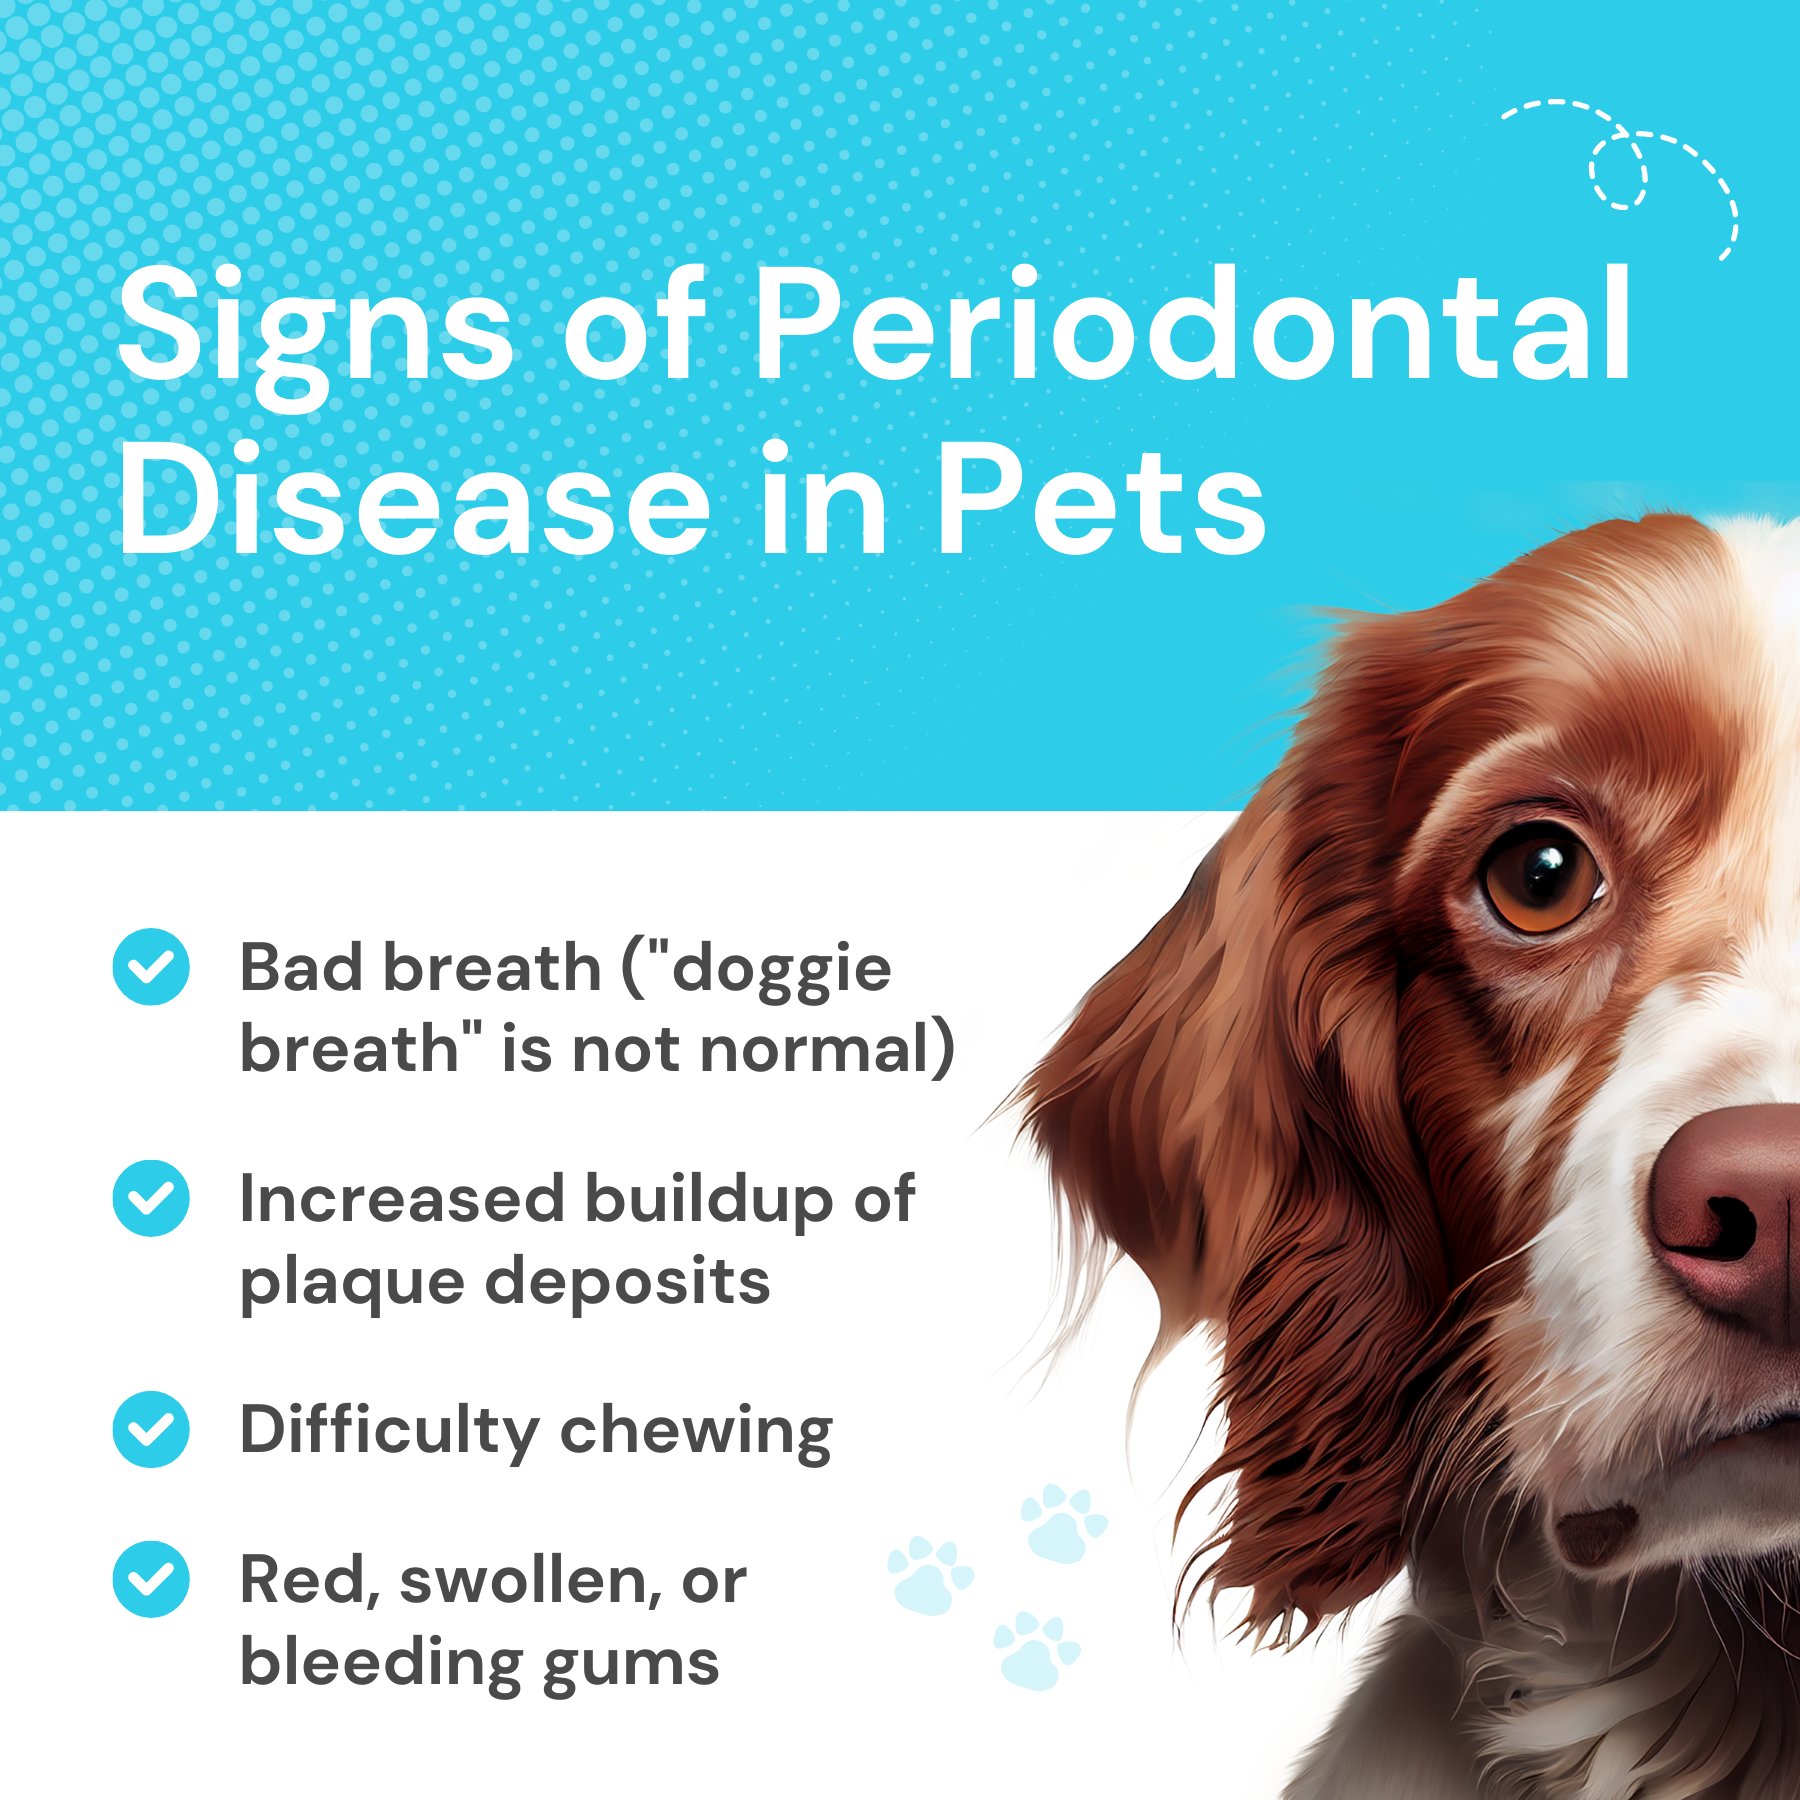 Signs of Periodontal Disease in Pets